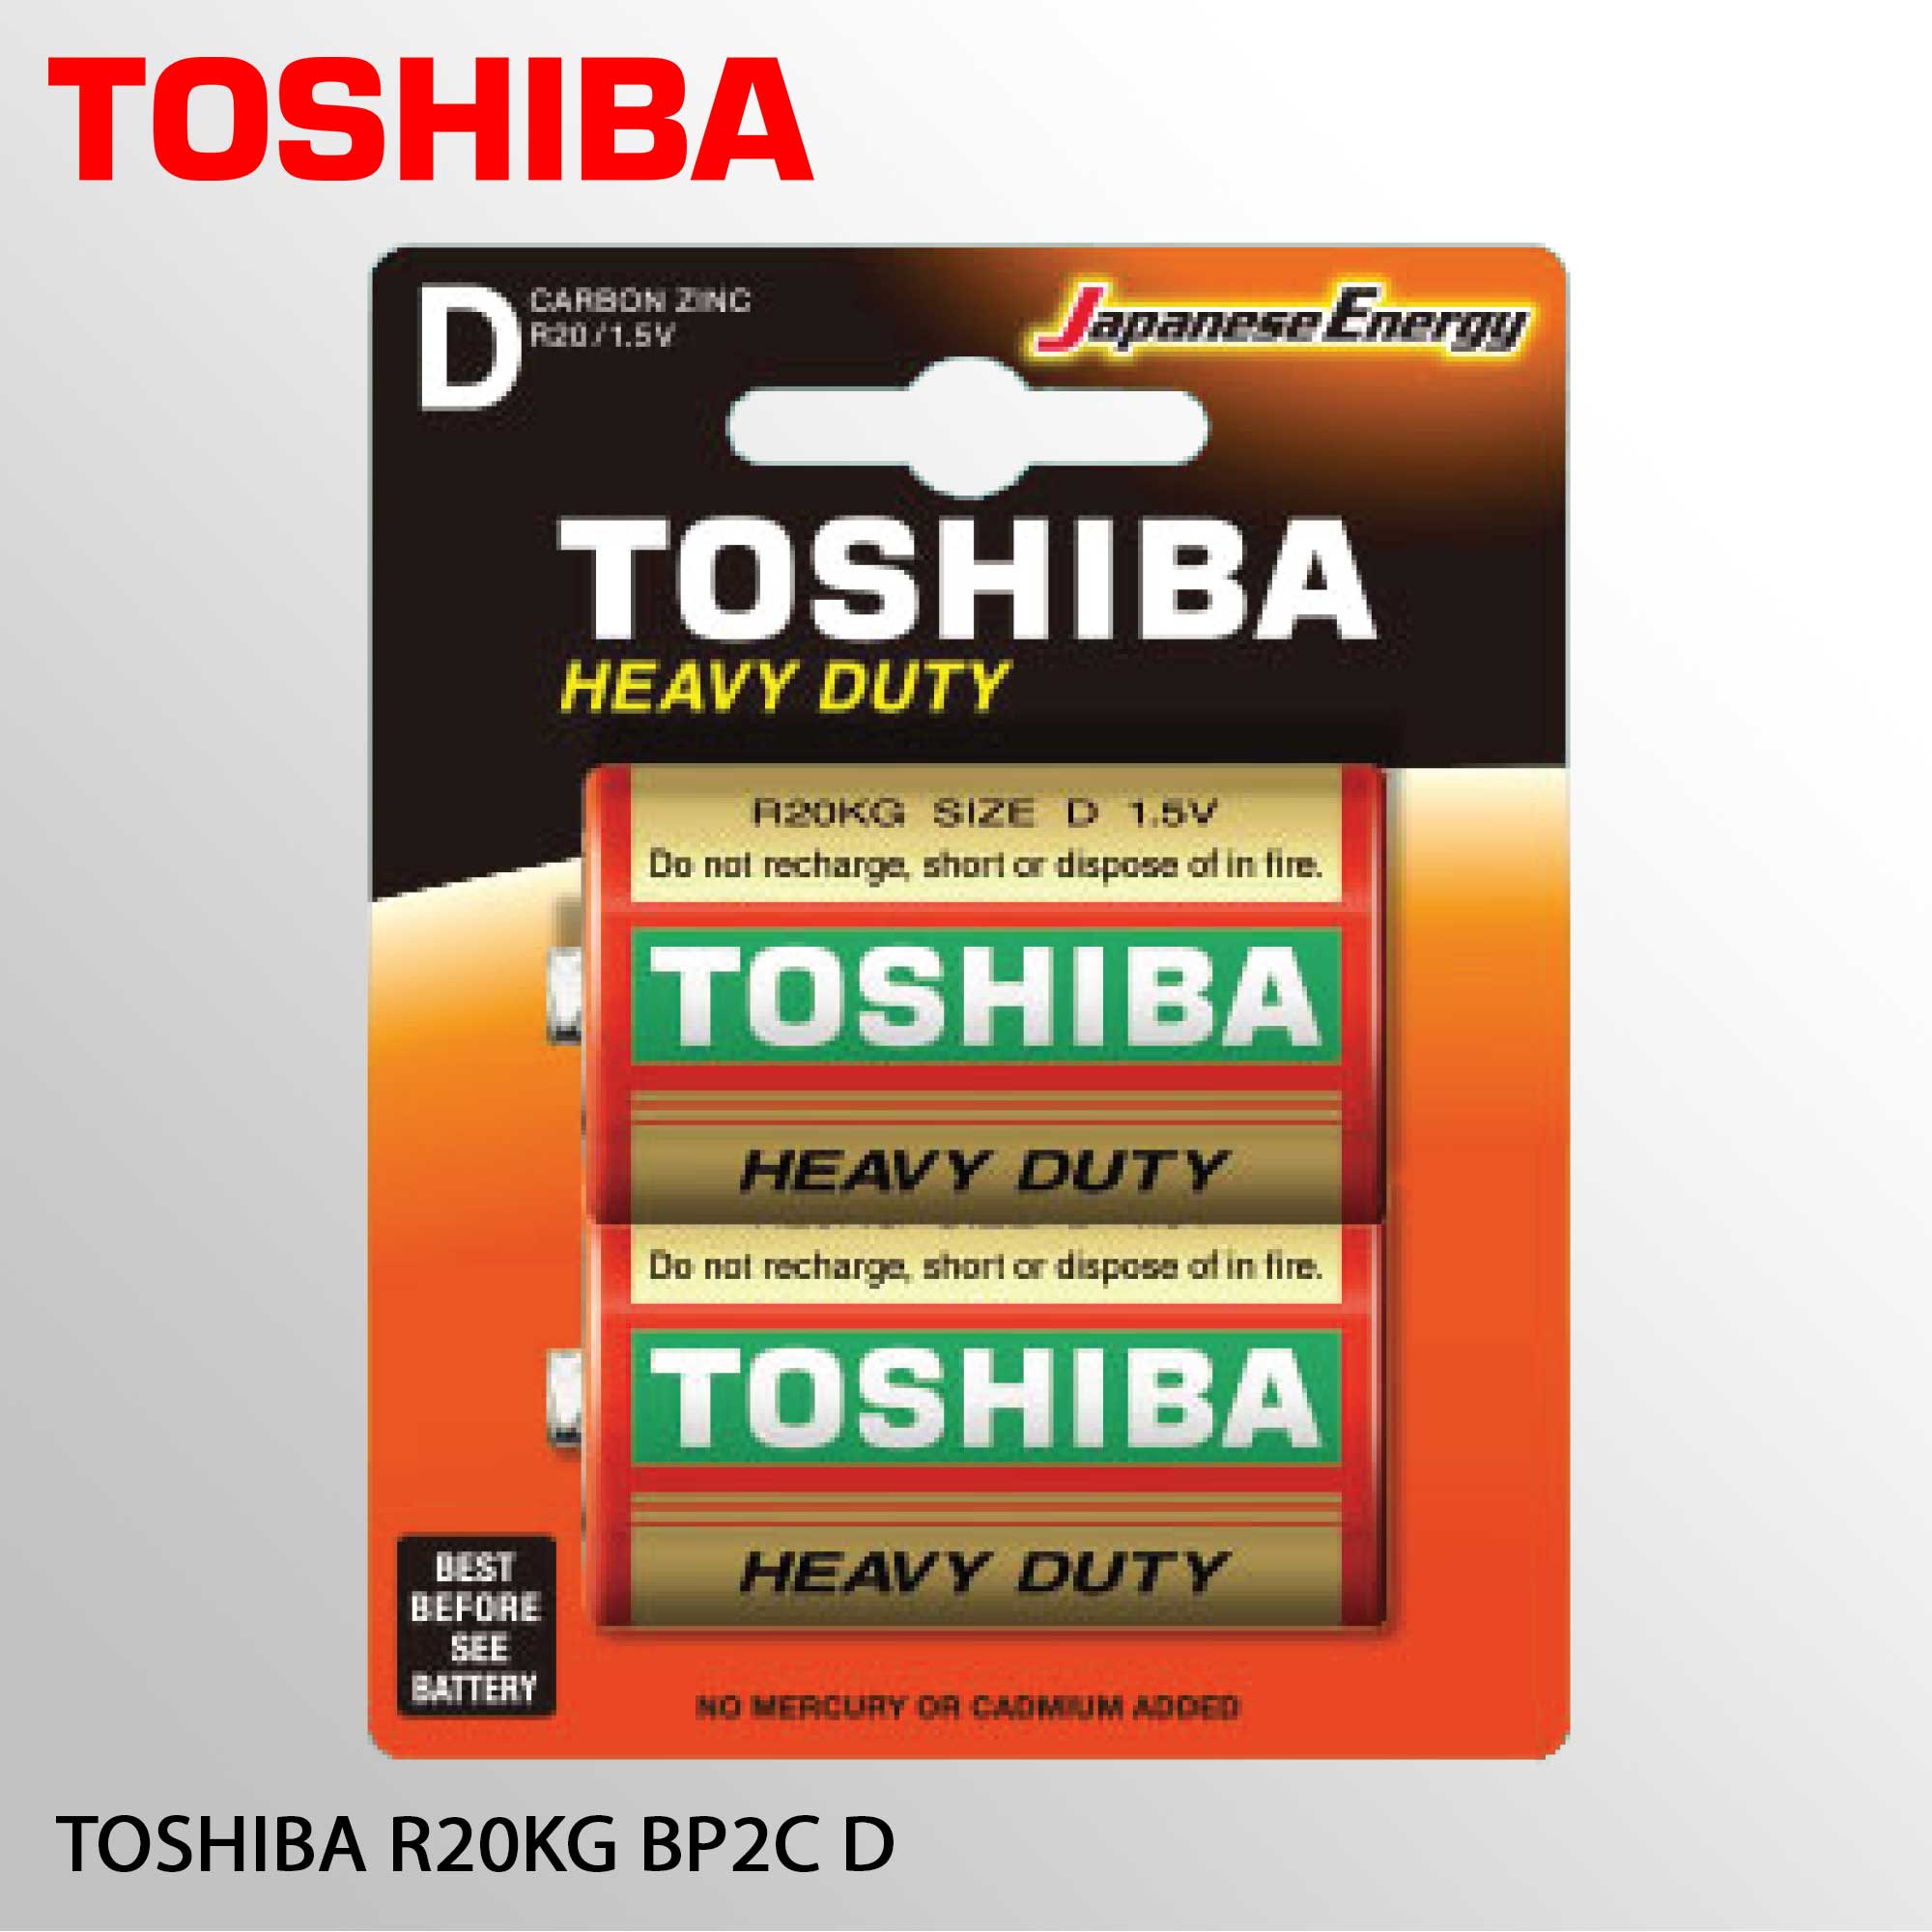 TOSHIBA R20KG BP2C D